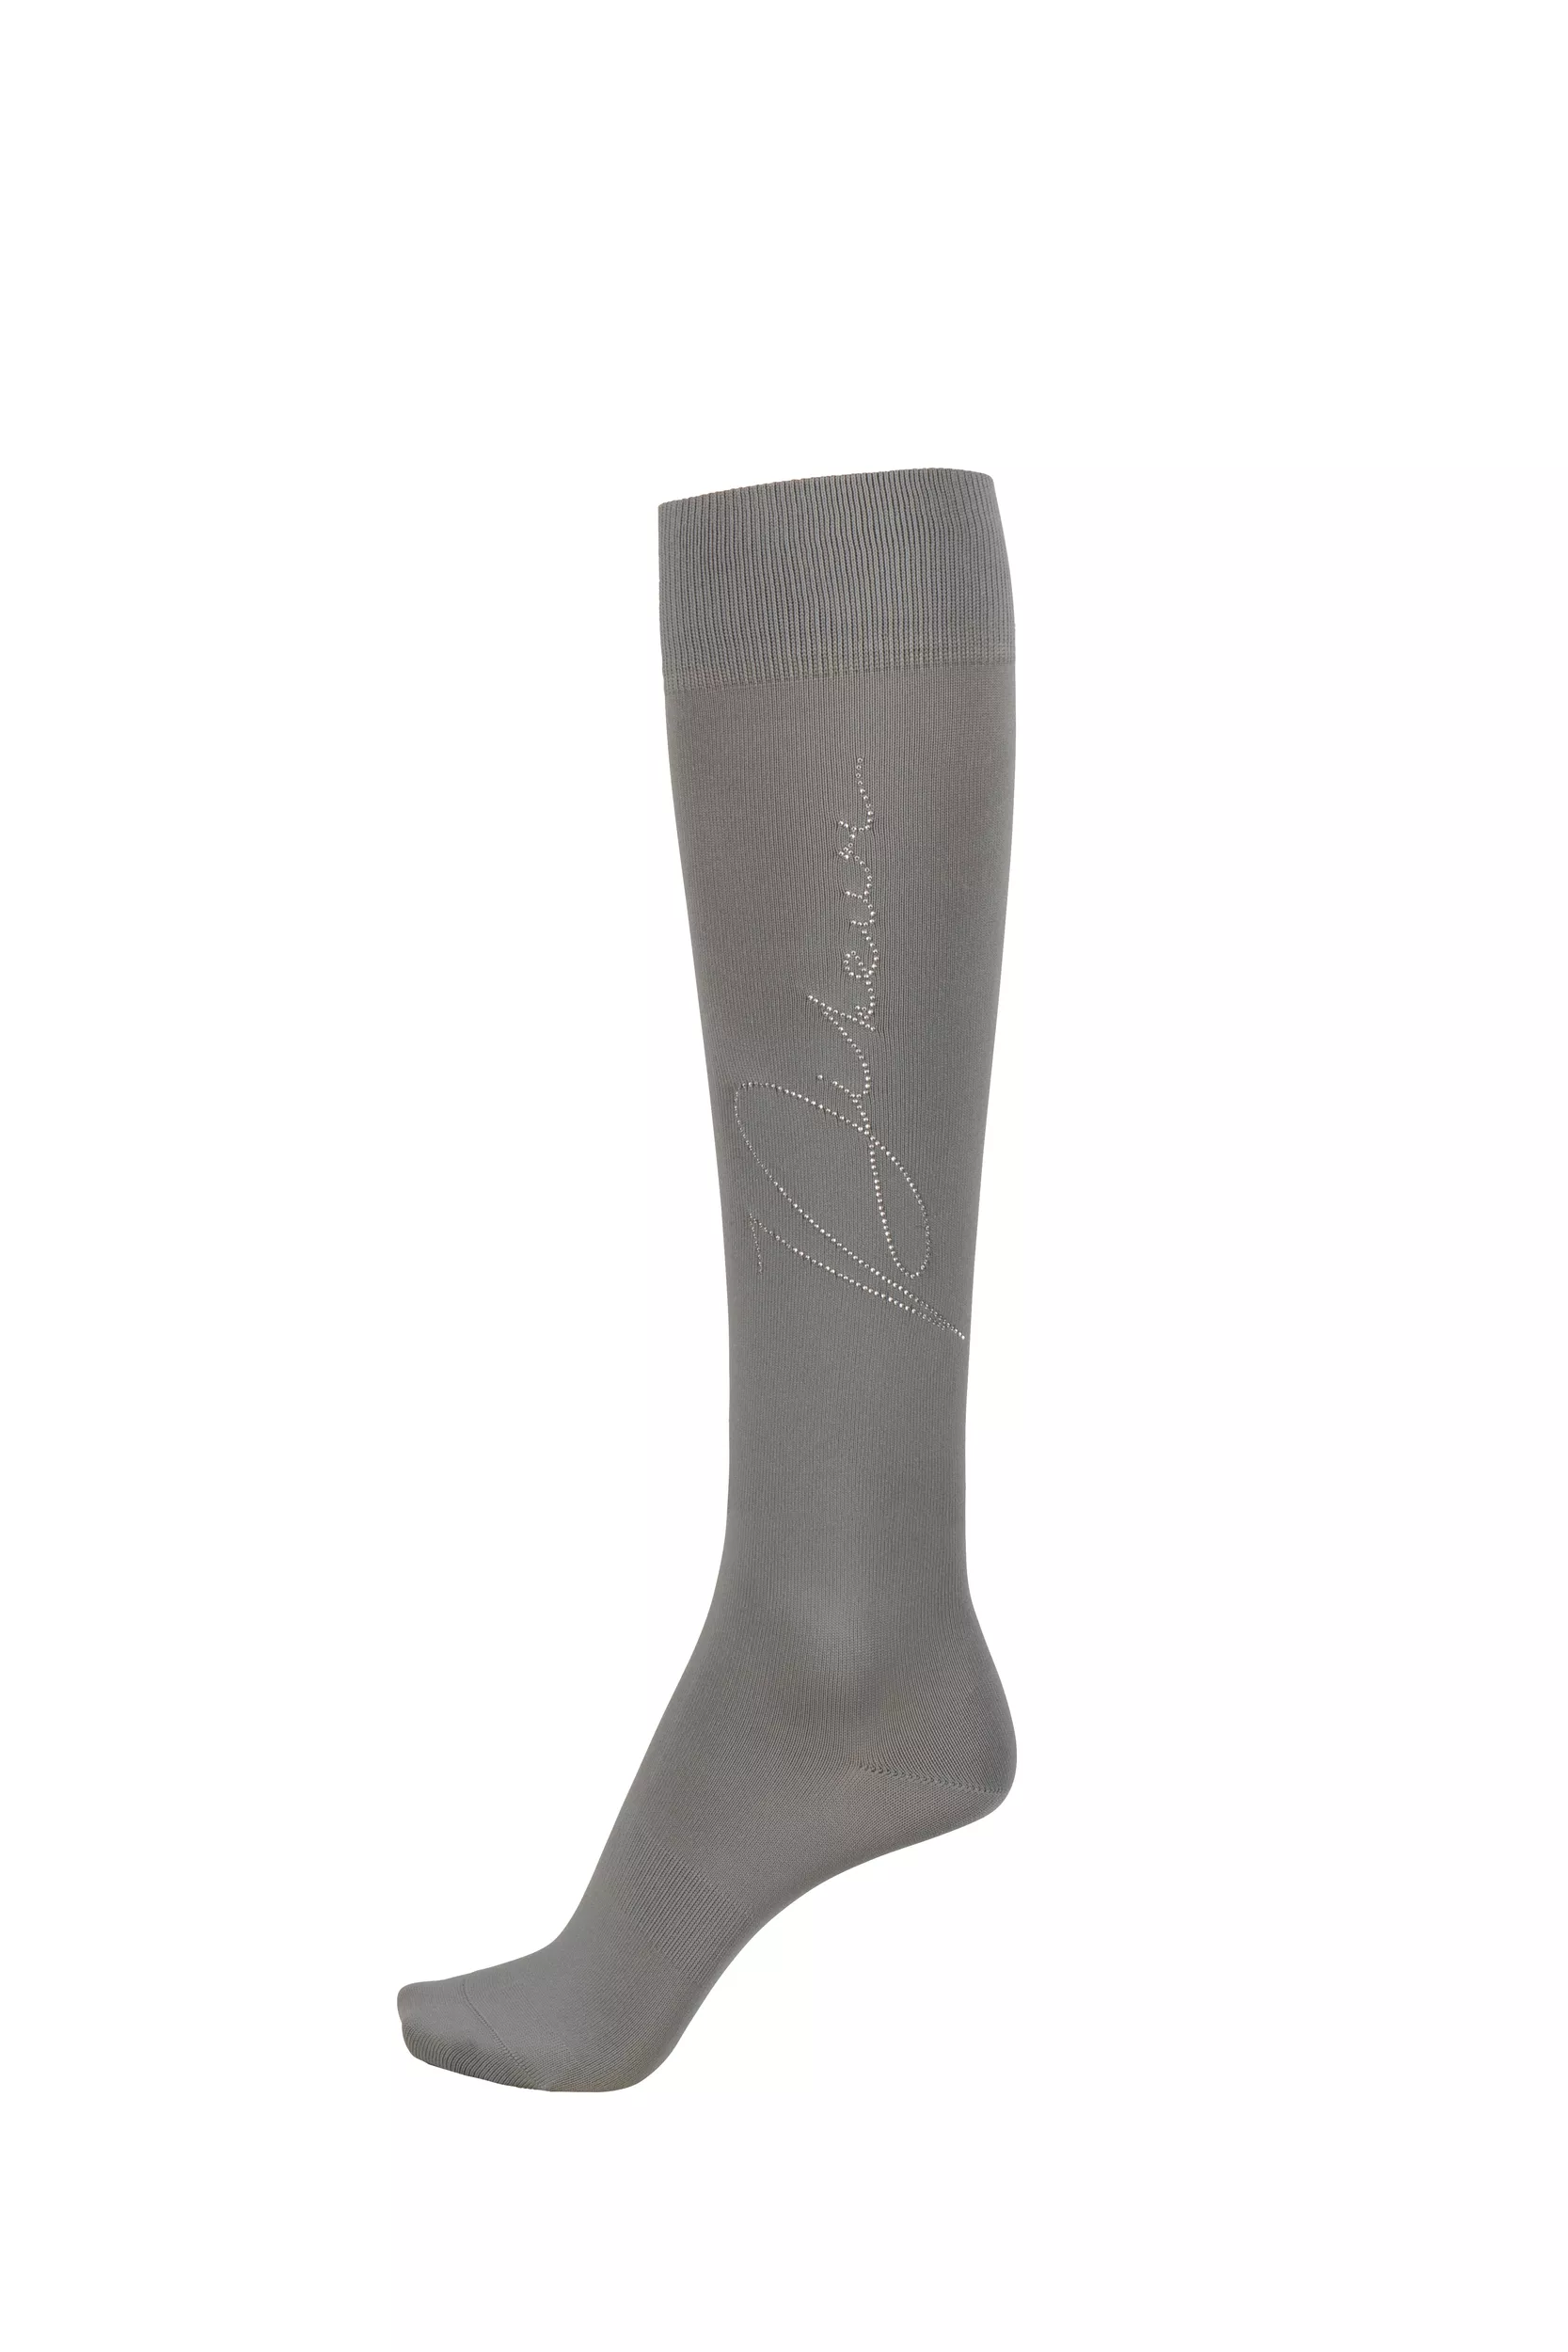 KNIE-STRUMPF riding socks with Rhinestuds, light grey / light grey